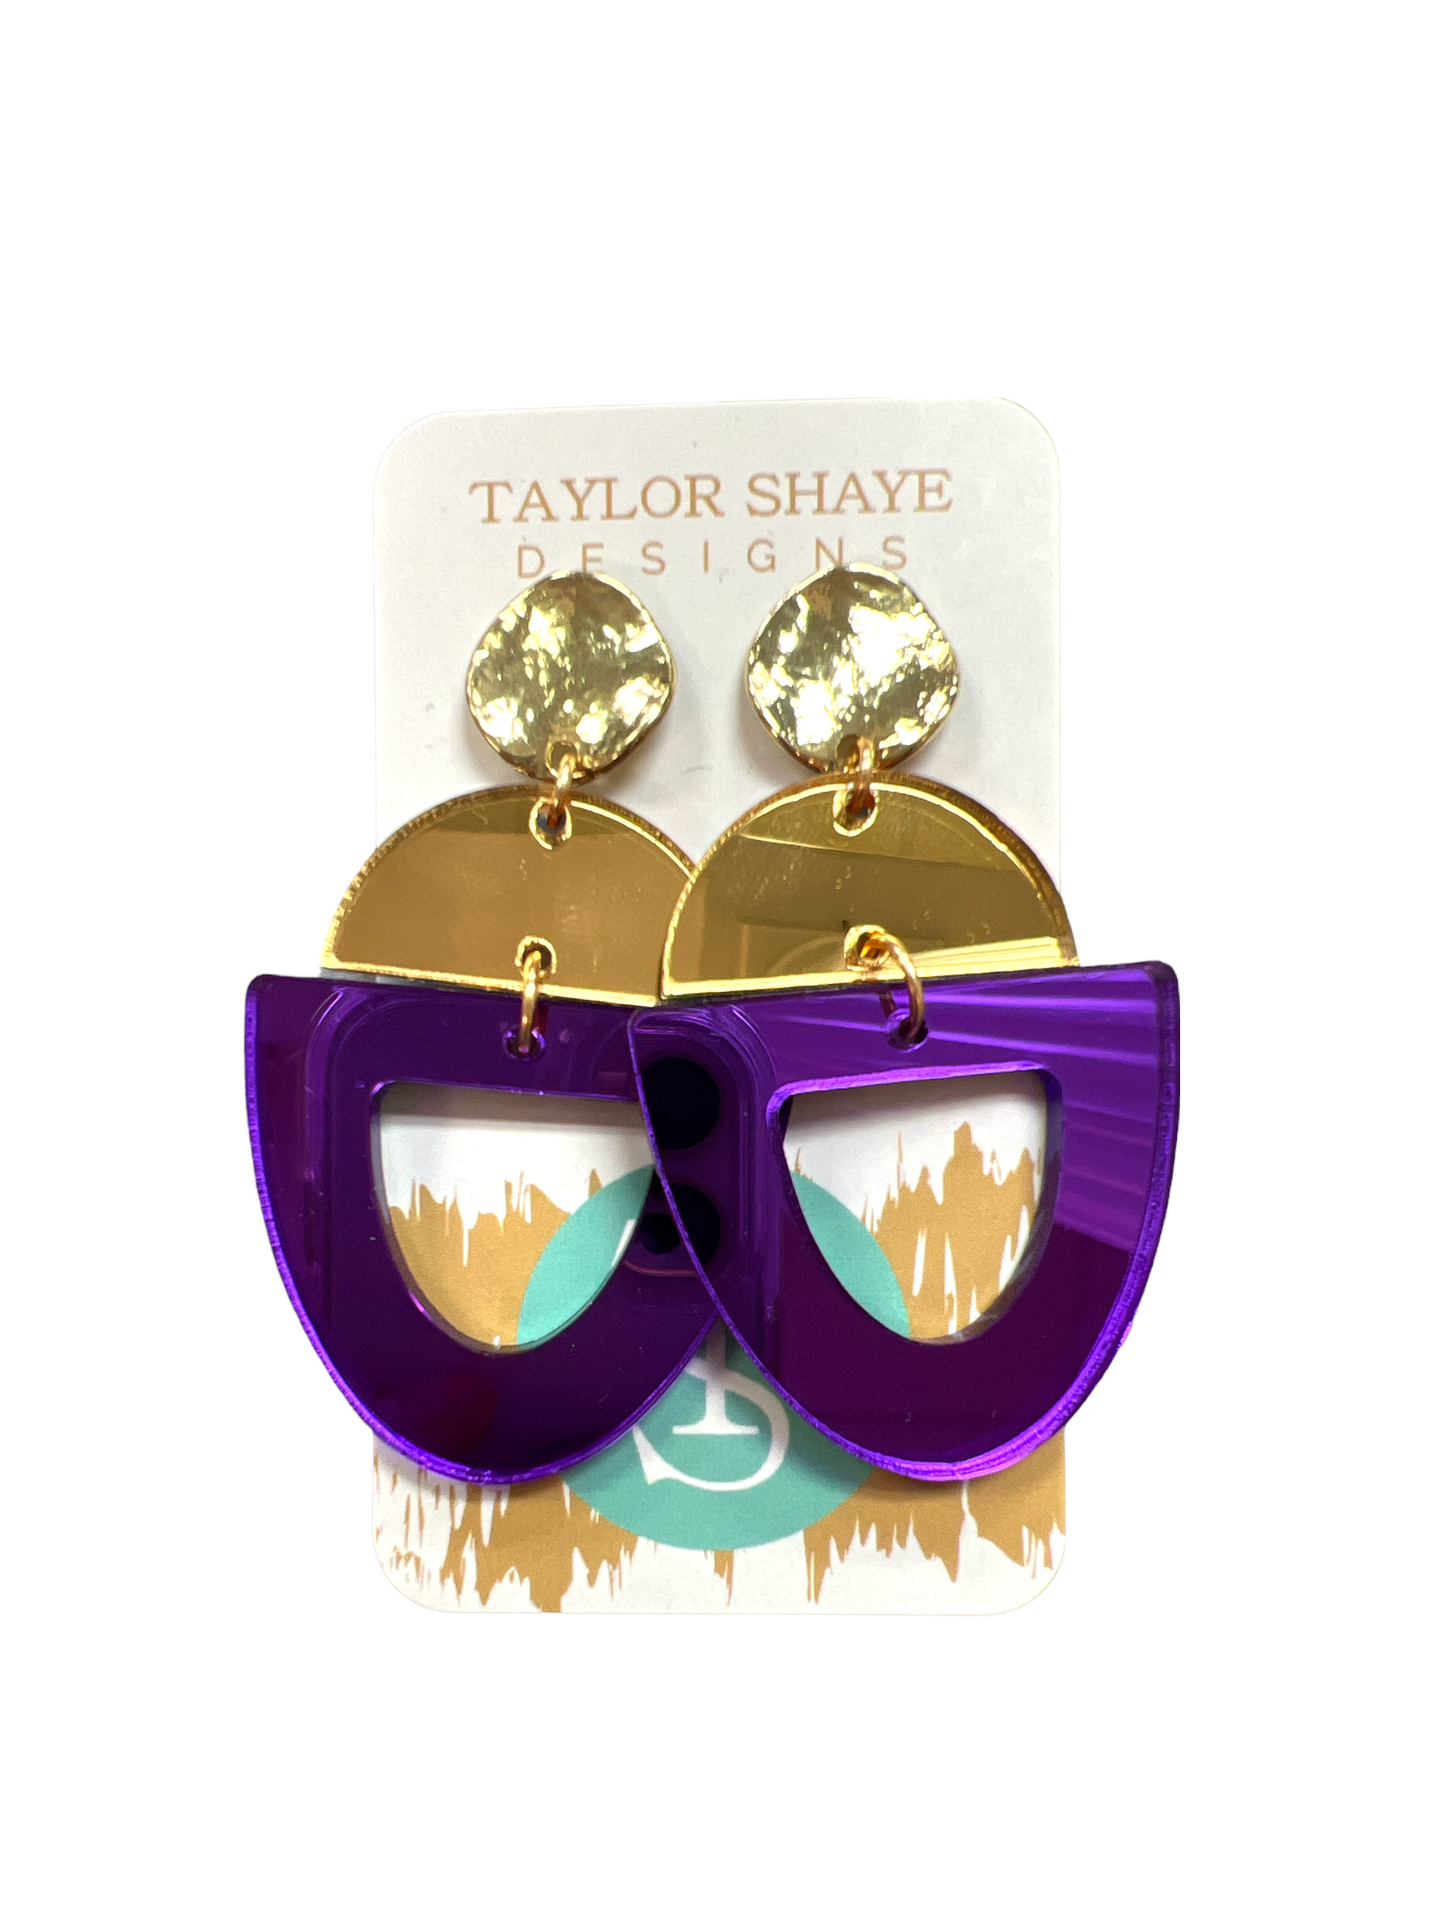 Taylor Shaye Designs